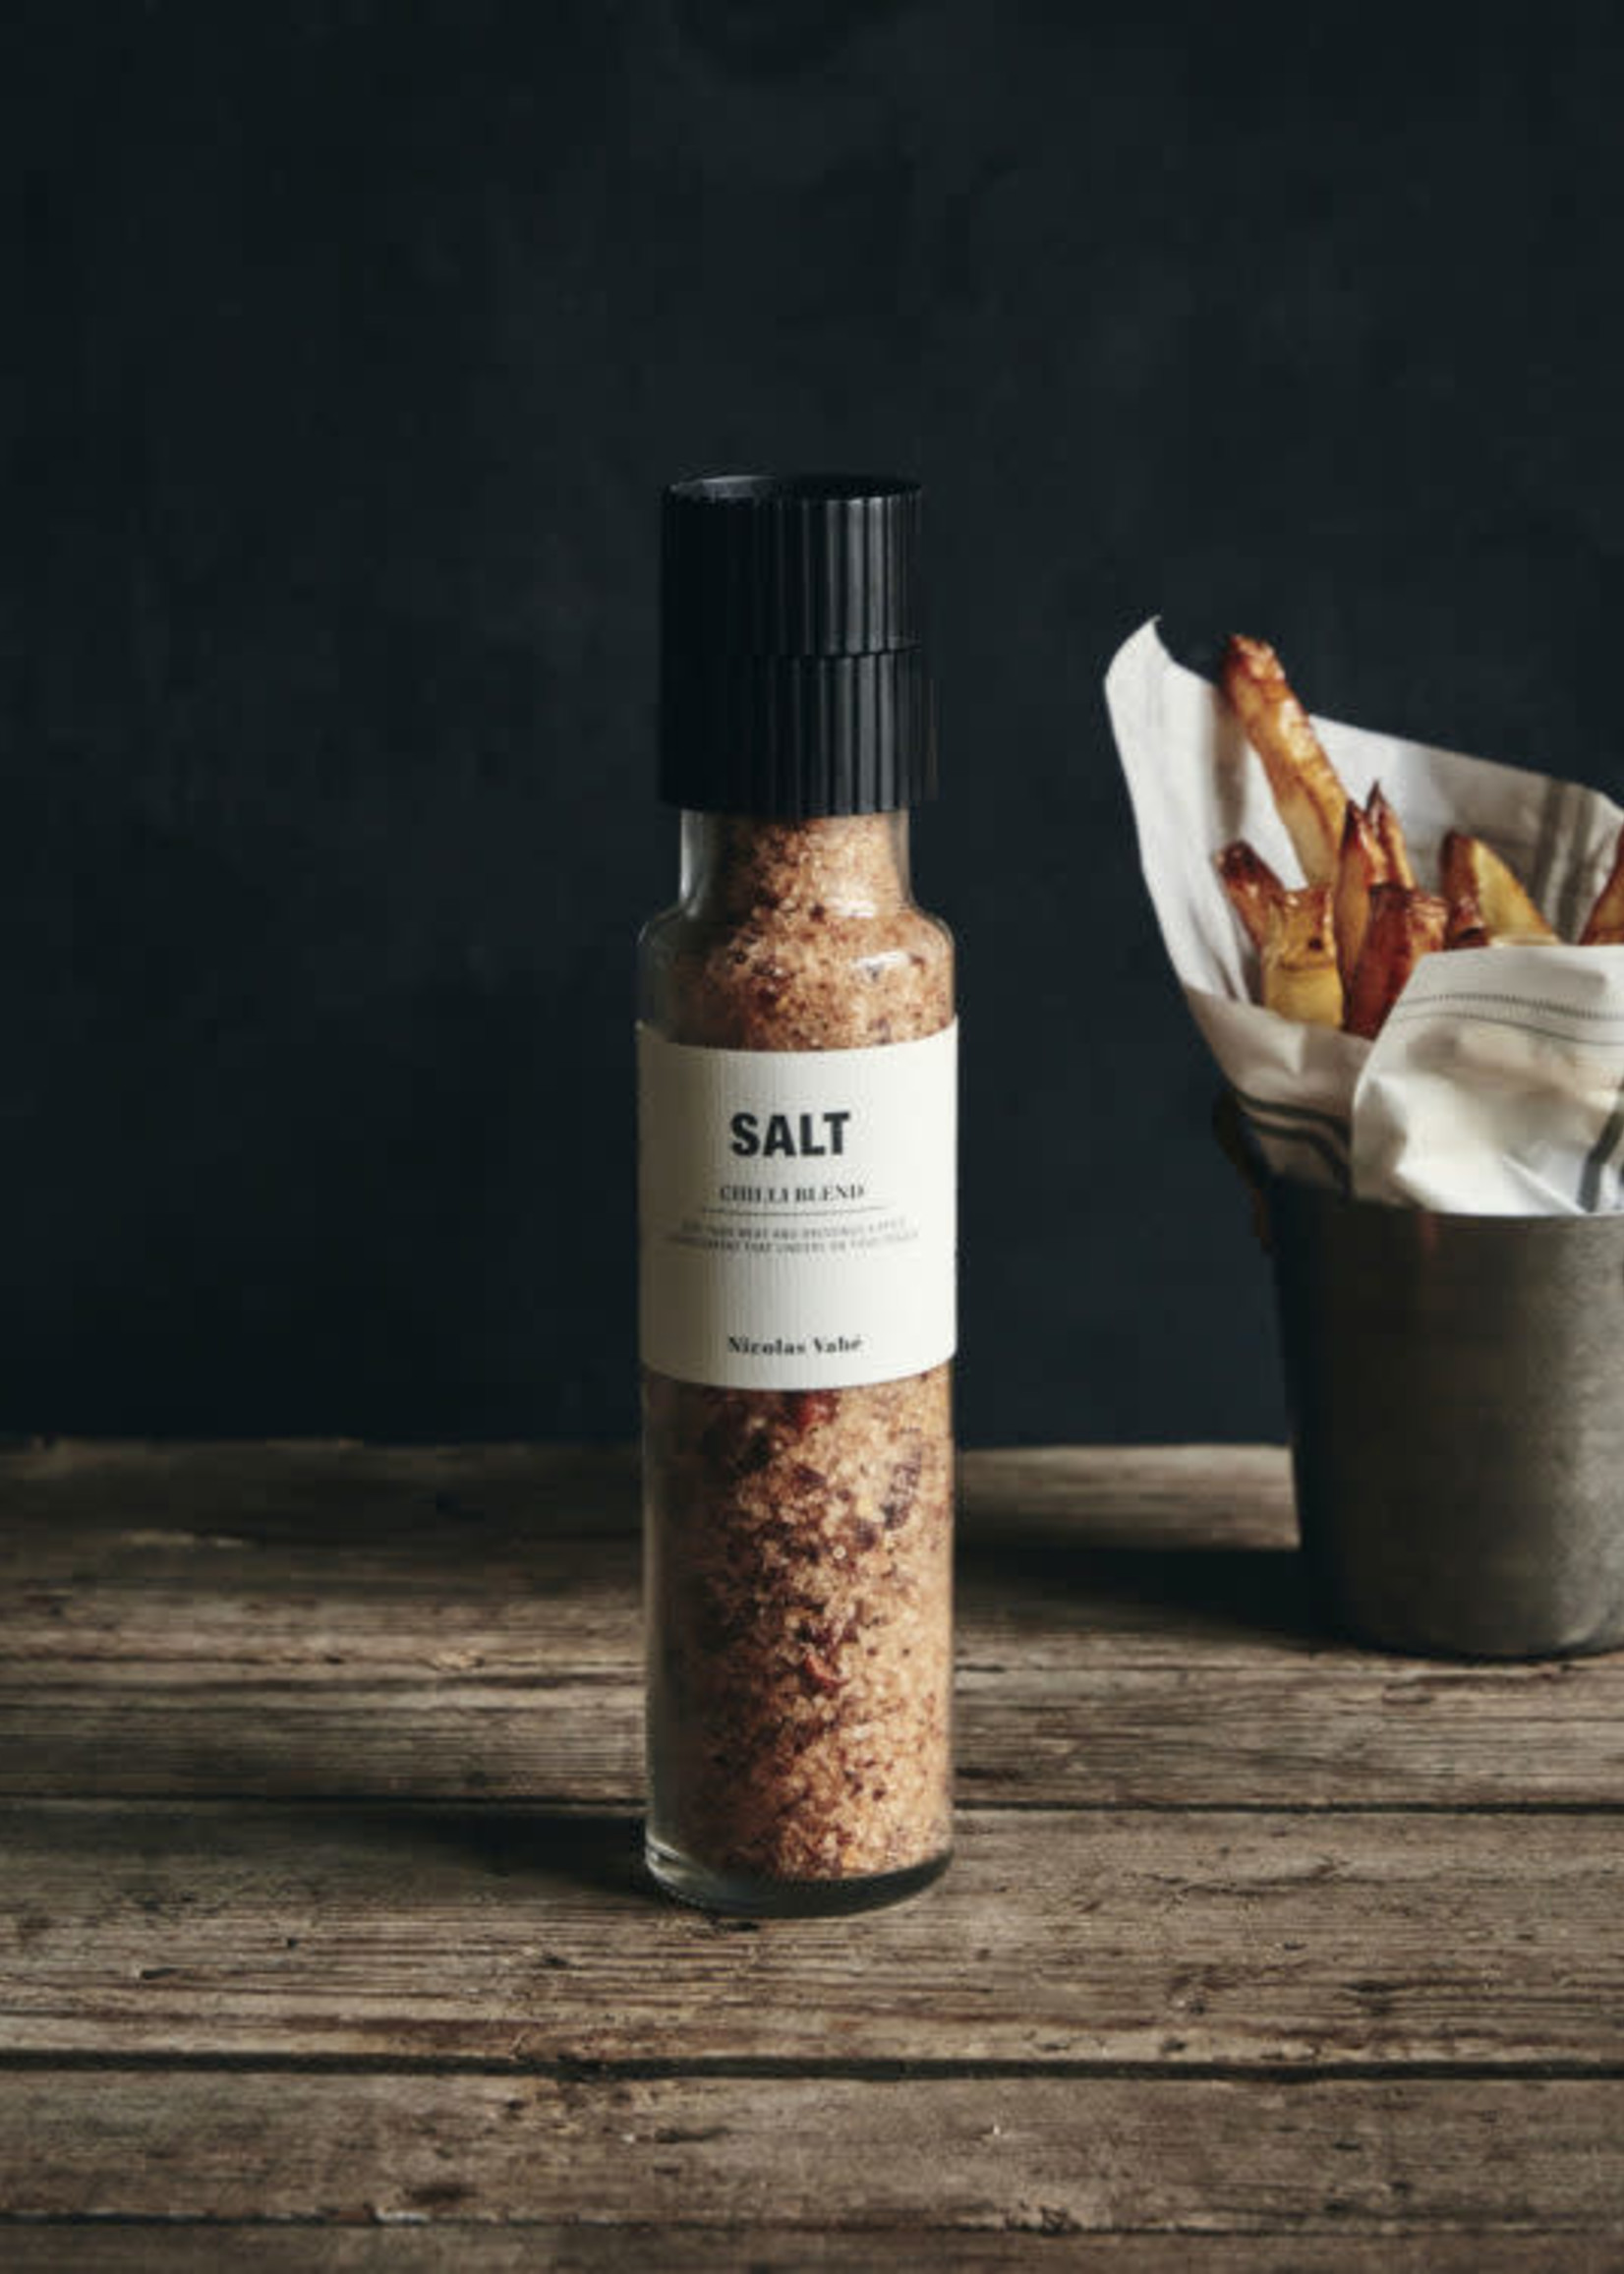 Nicolas Vahe Society of Lifestyle Salt - Chilli Blend